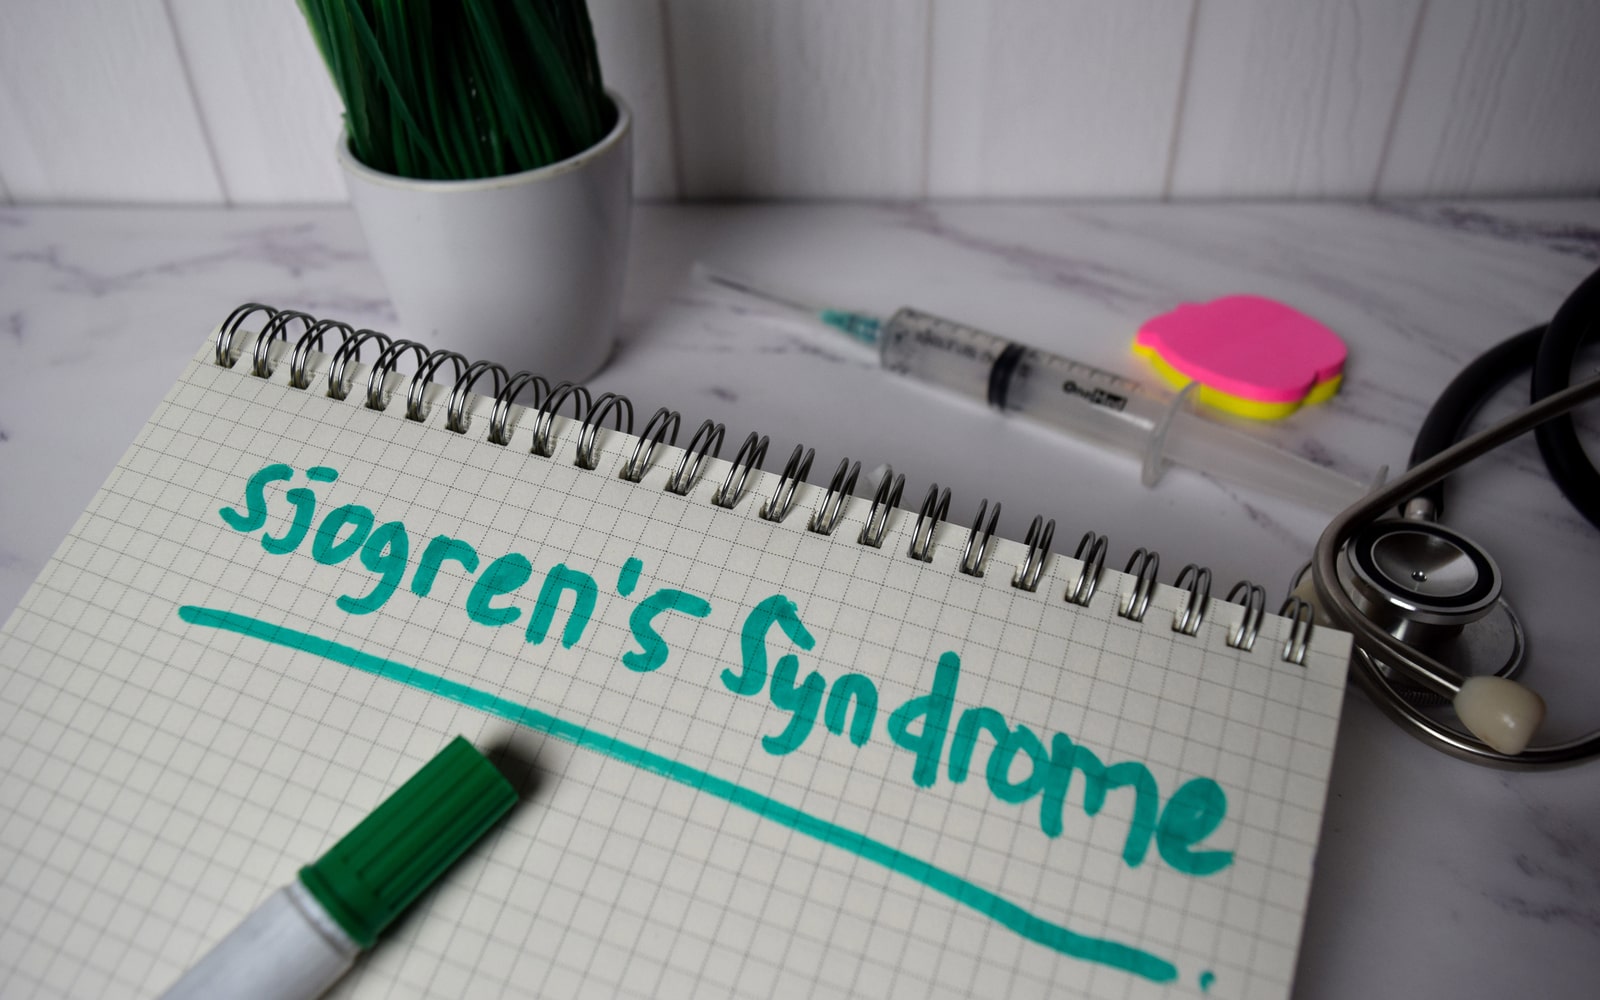 Sjorgen Syndrome